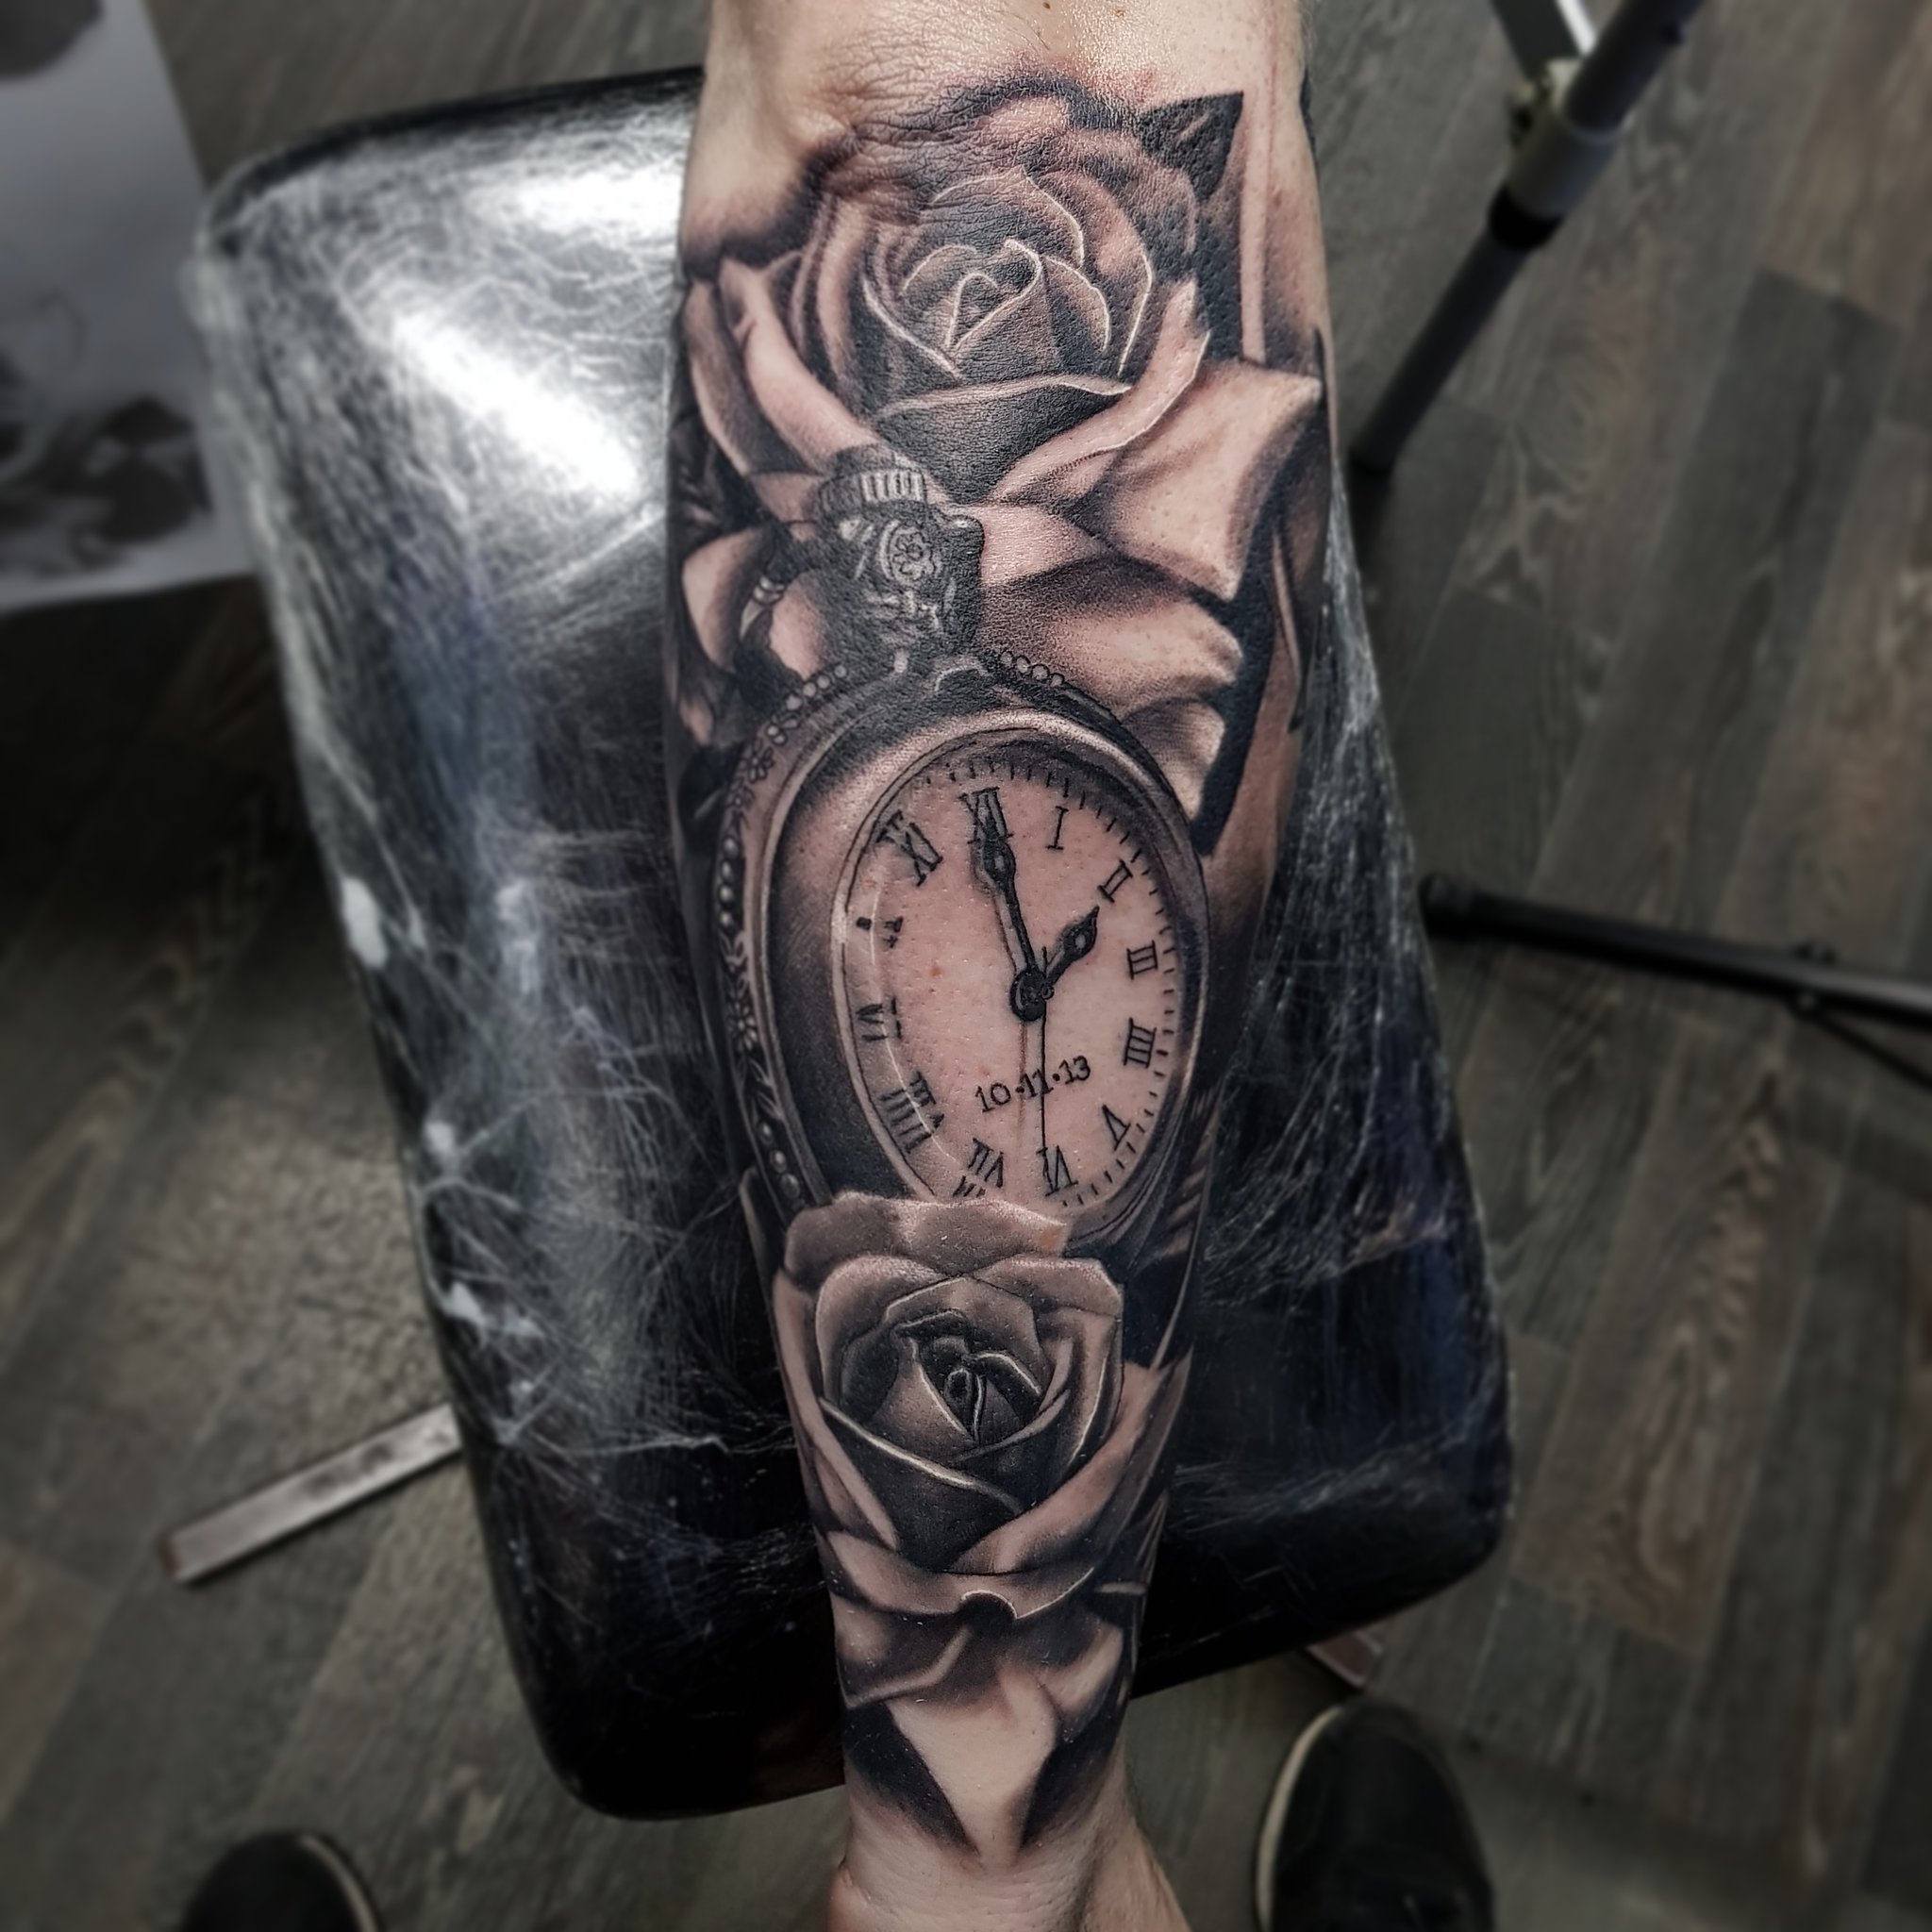 Time tattoo by Roman Kuznetsov | Post 5571